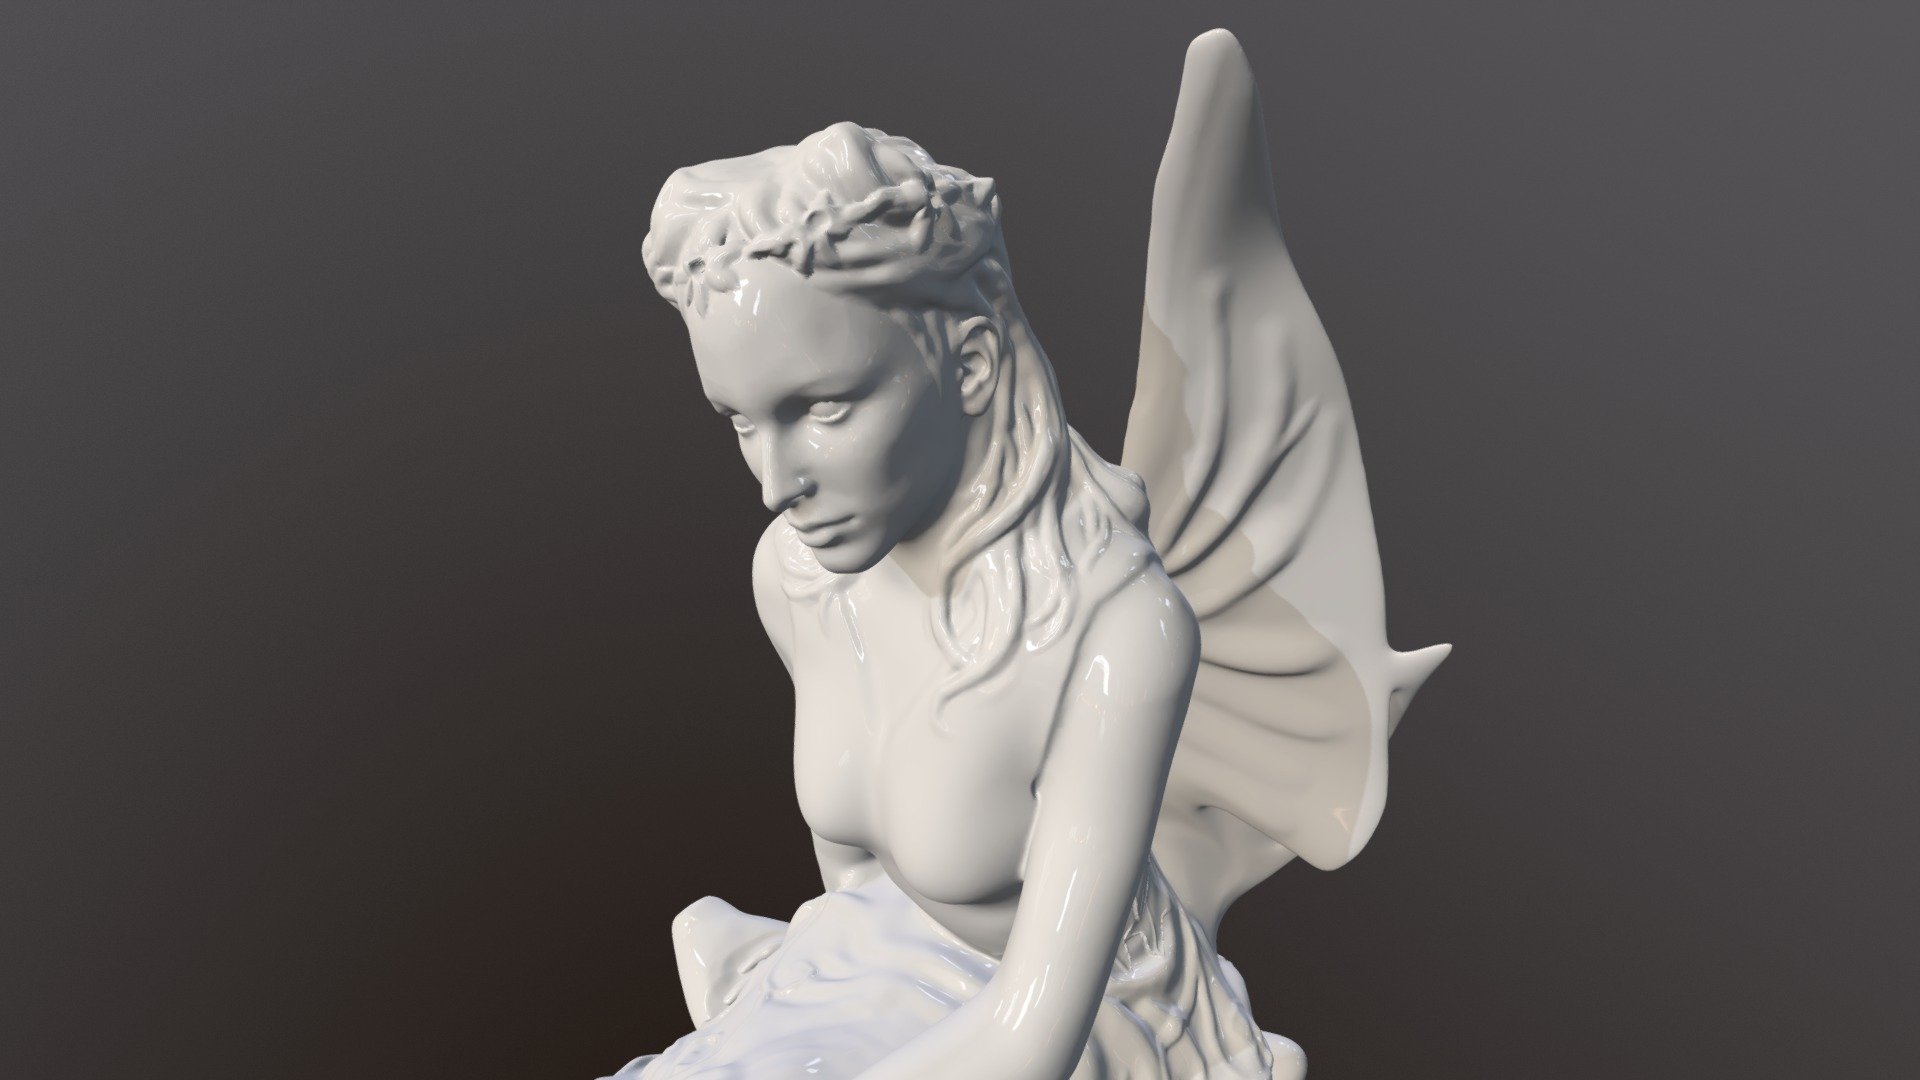 Digital, hand sculpted fairy